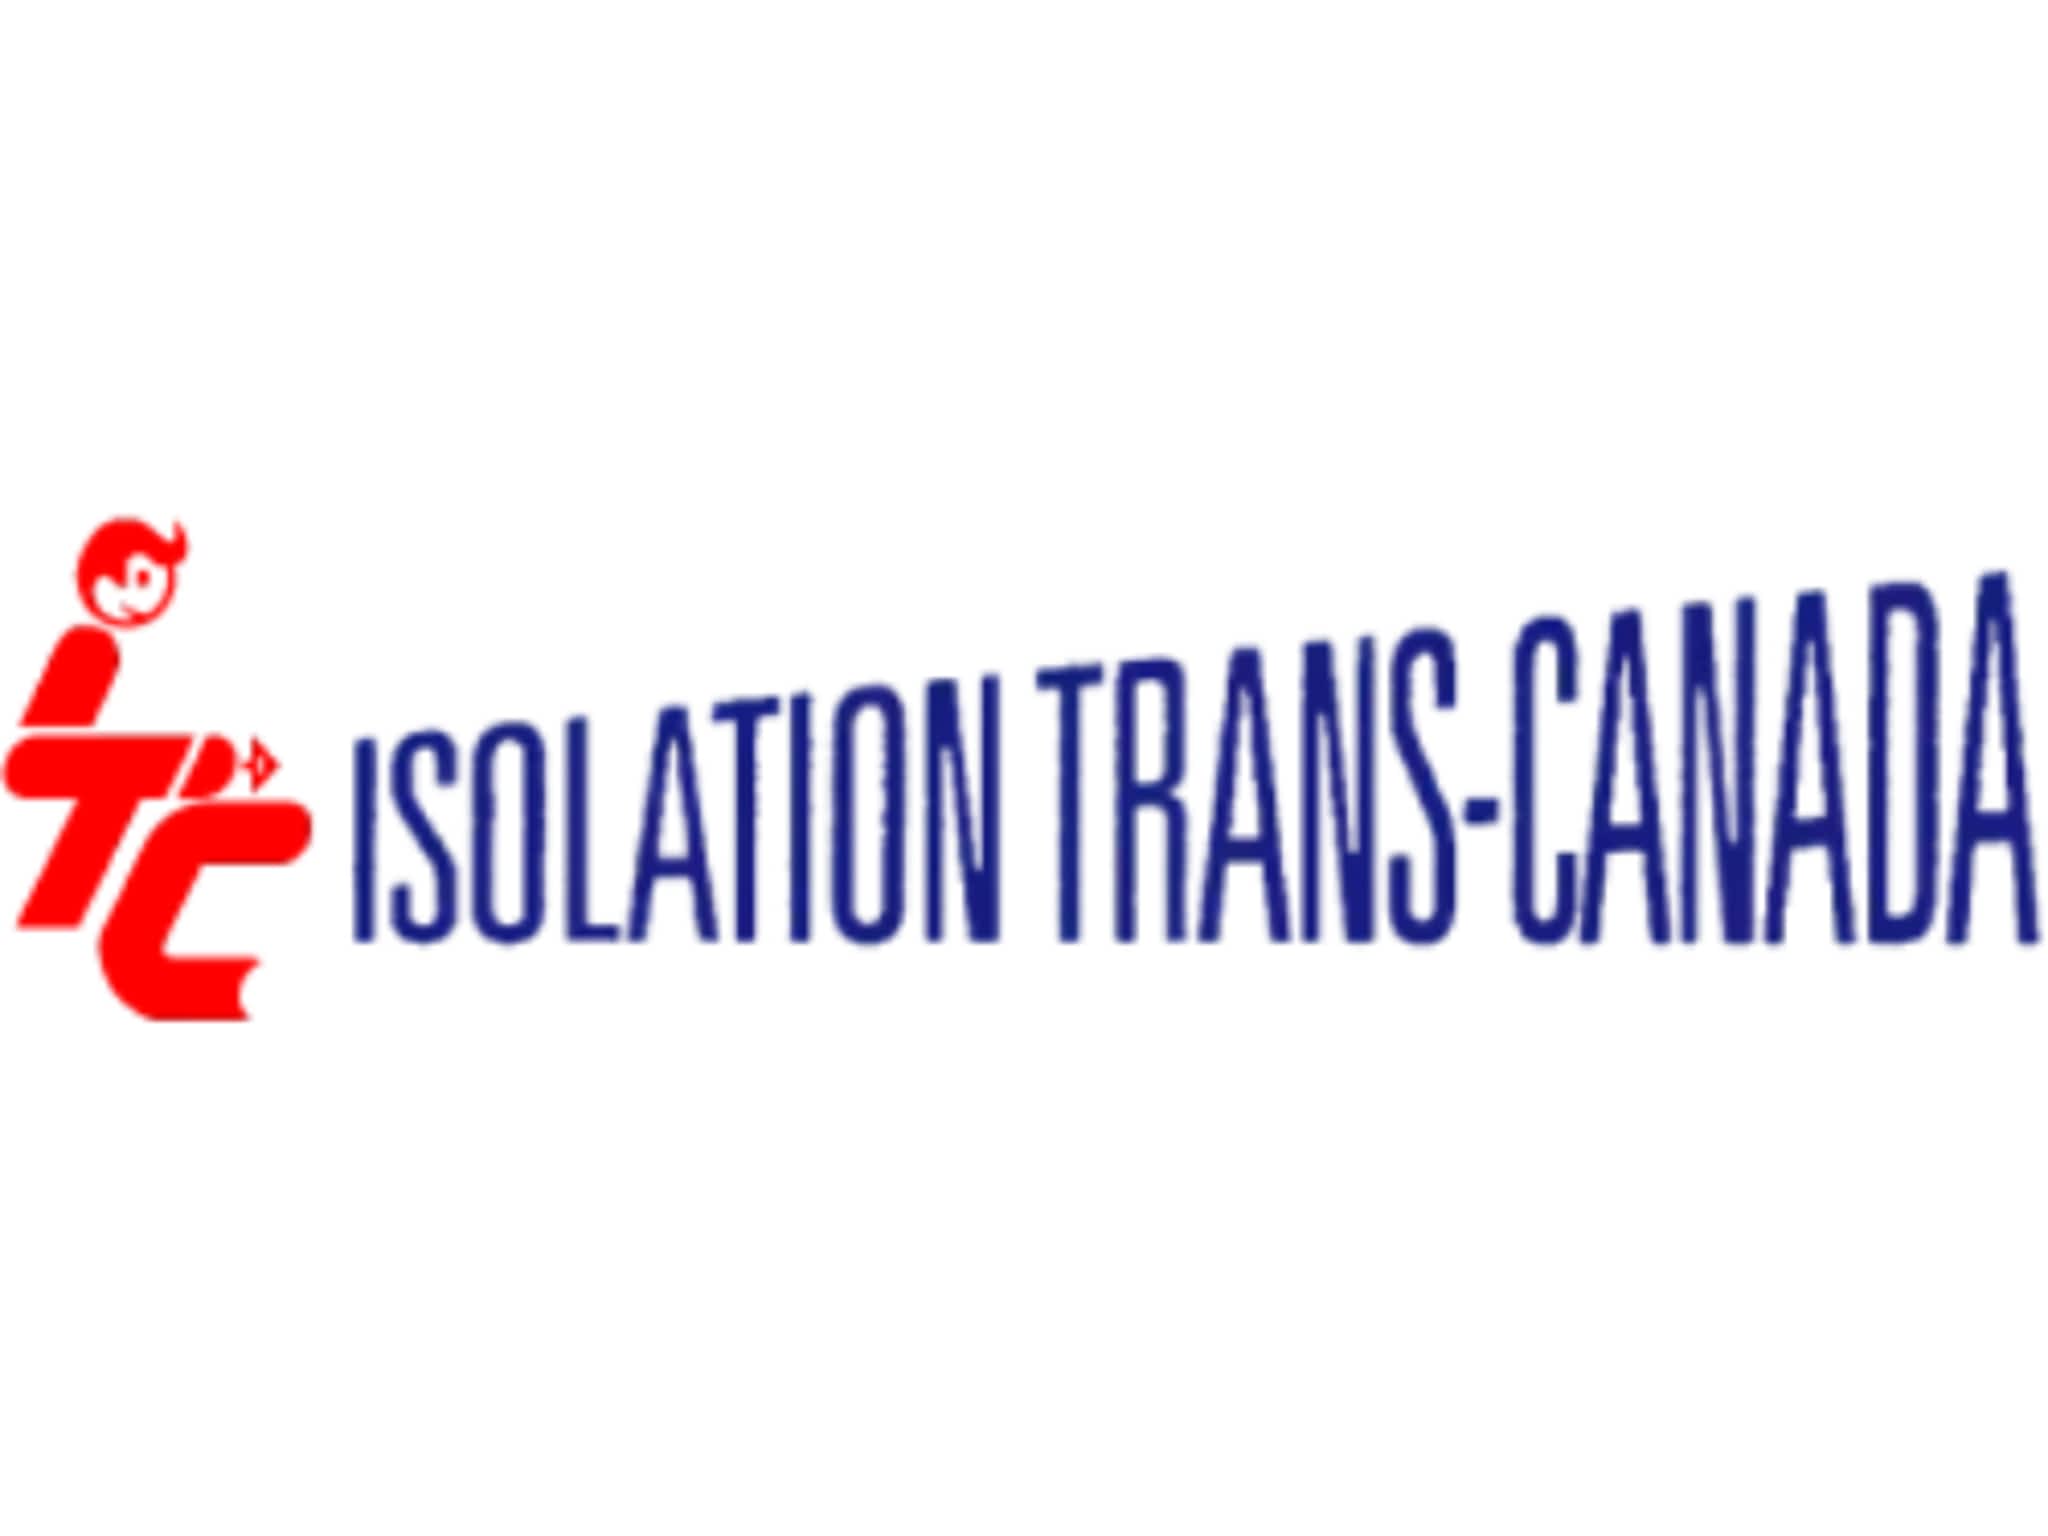 photo Isolation Trans-Canada